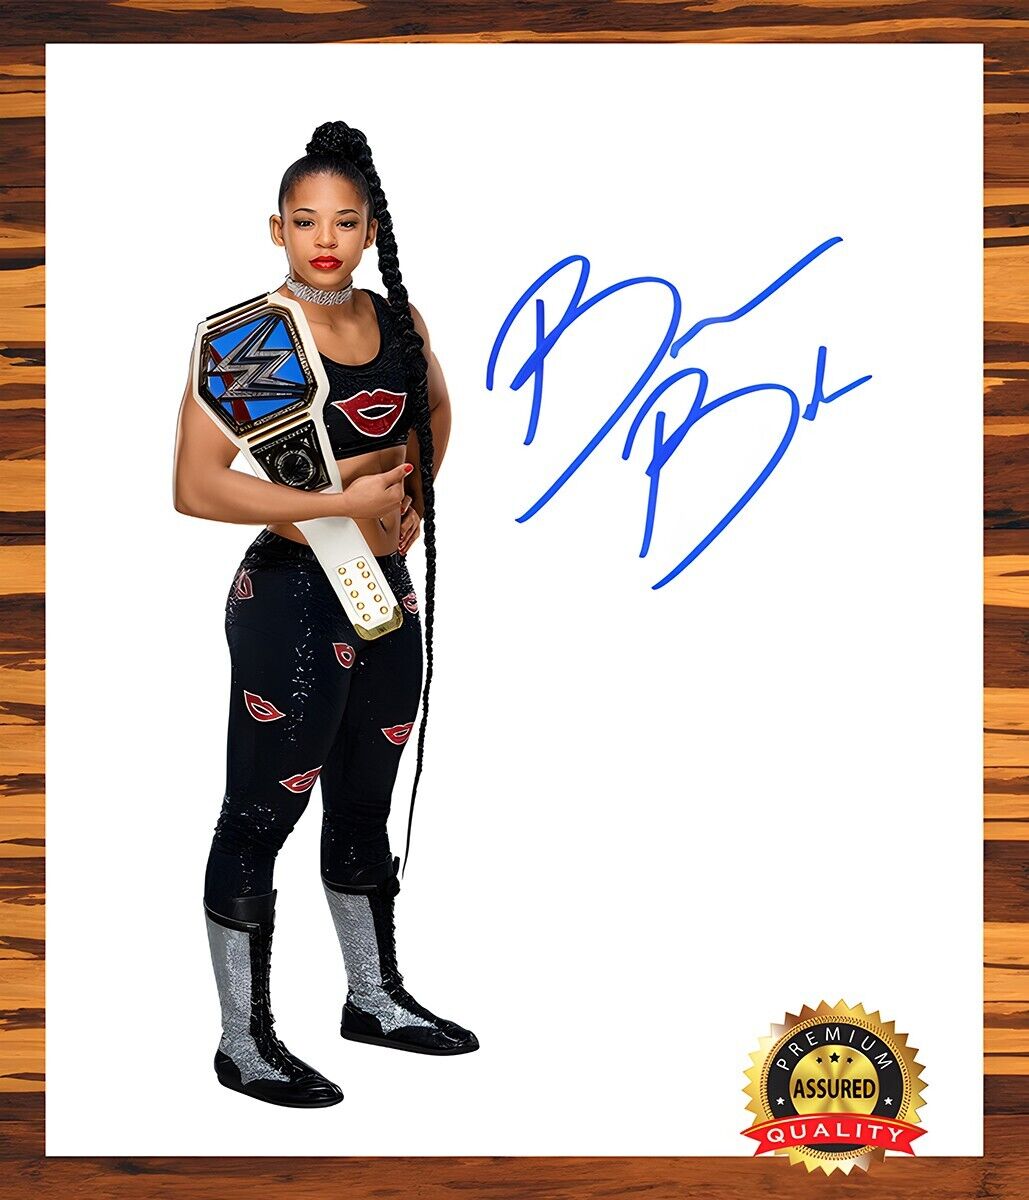 Bianca Belair - Autographed Signed 8x10 Photo (wwe Champion) Reprint